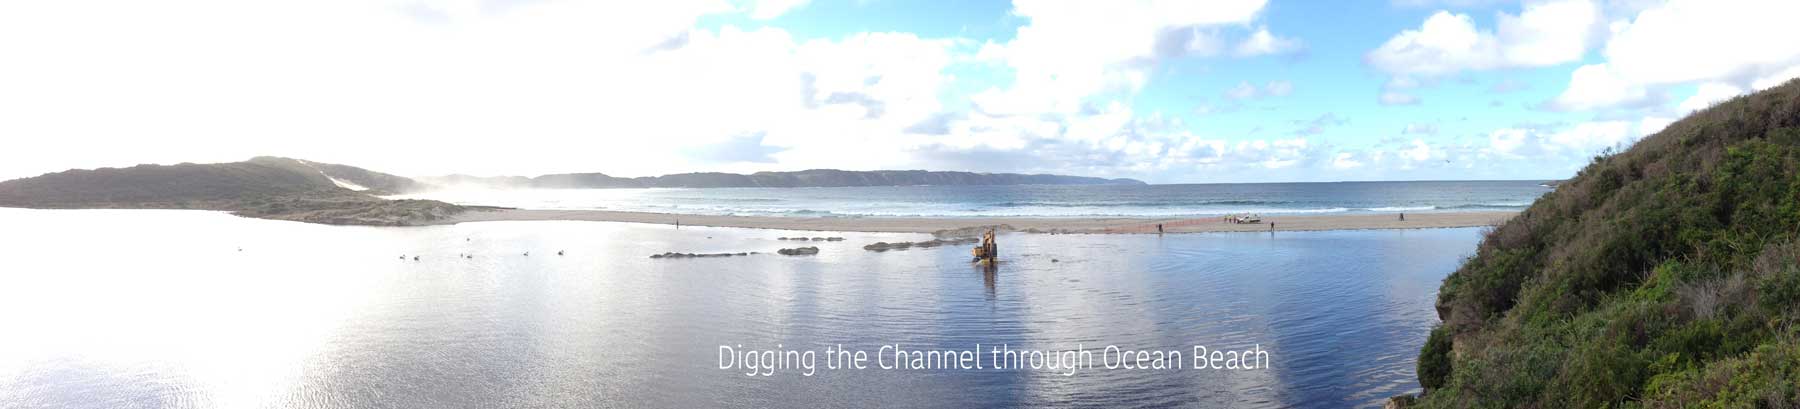 Ocean Beach Channel Digging